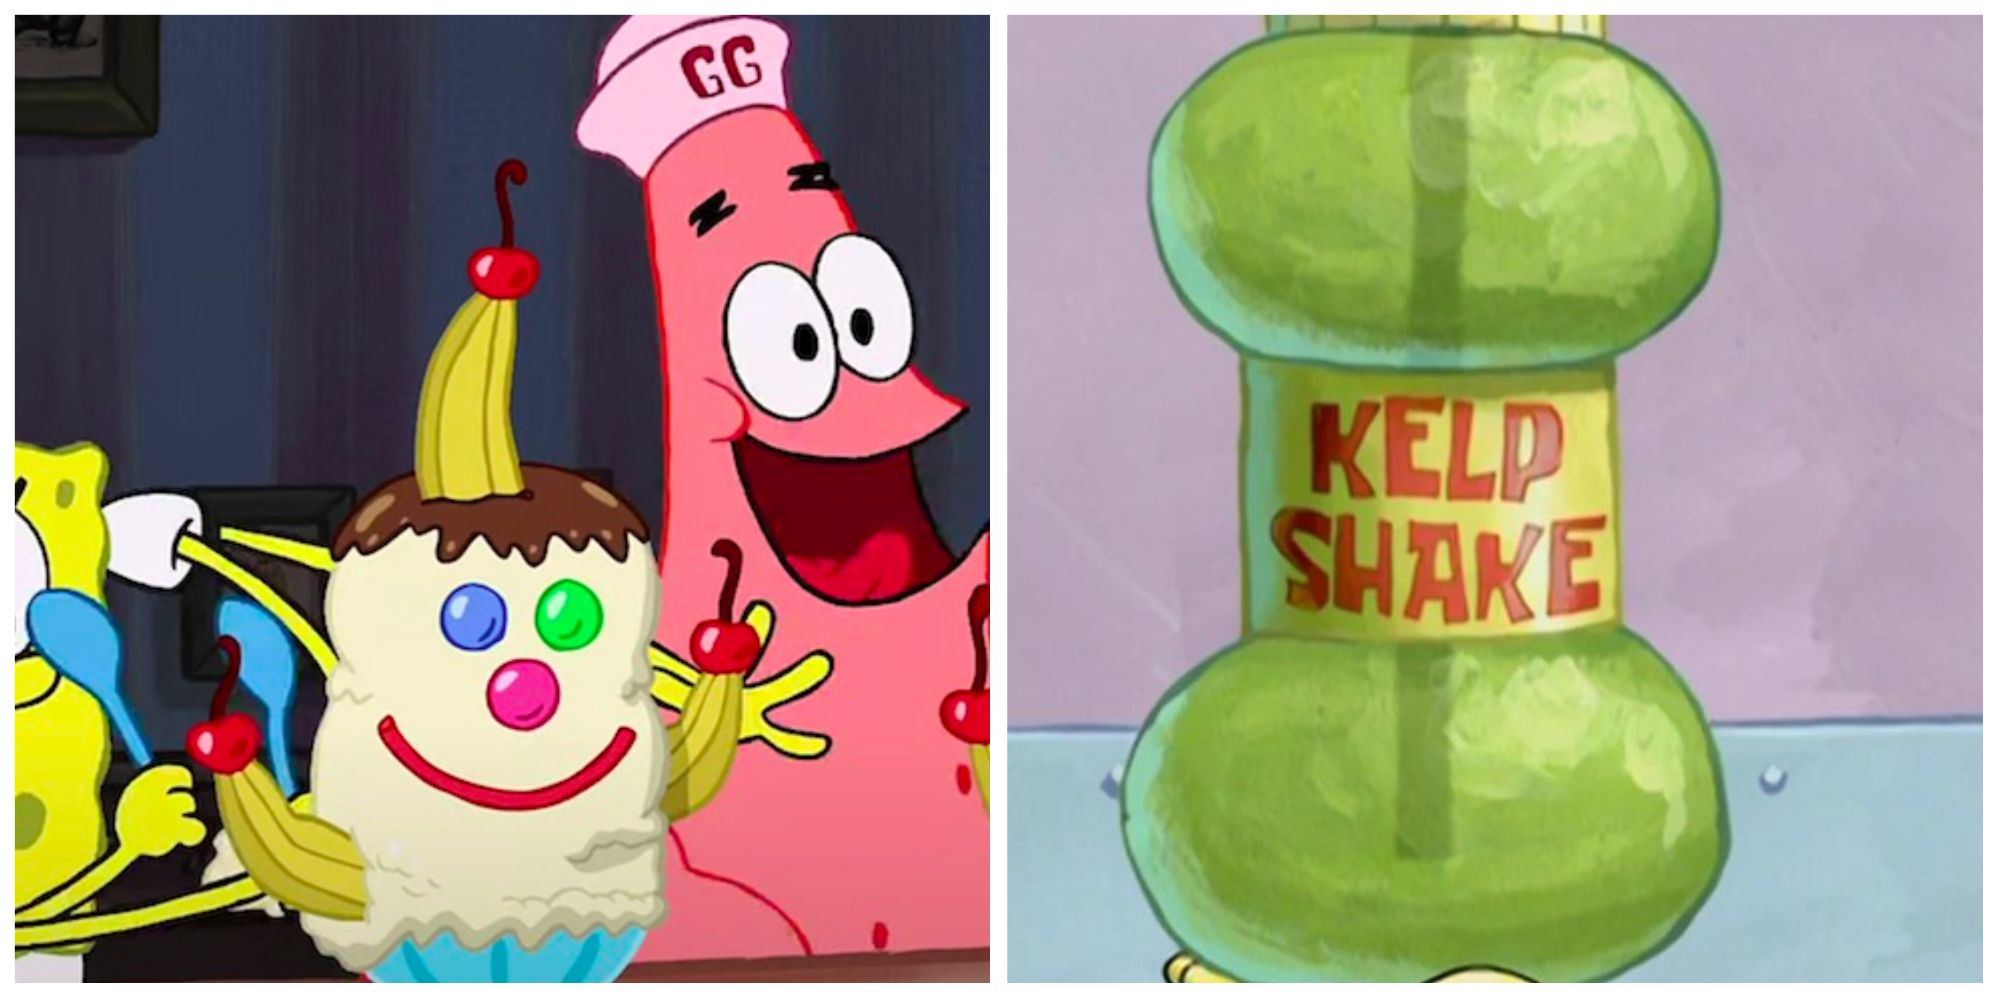 Left: Patrick with an ice cream sundae. Right: A Kelp Shake. Image sources: nerdist.com and reddit.com